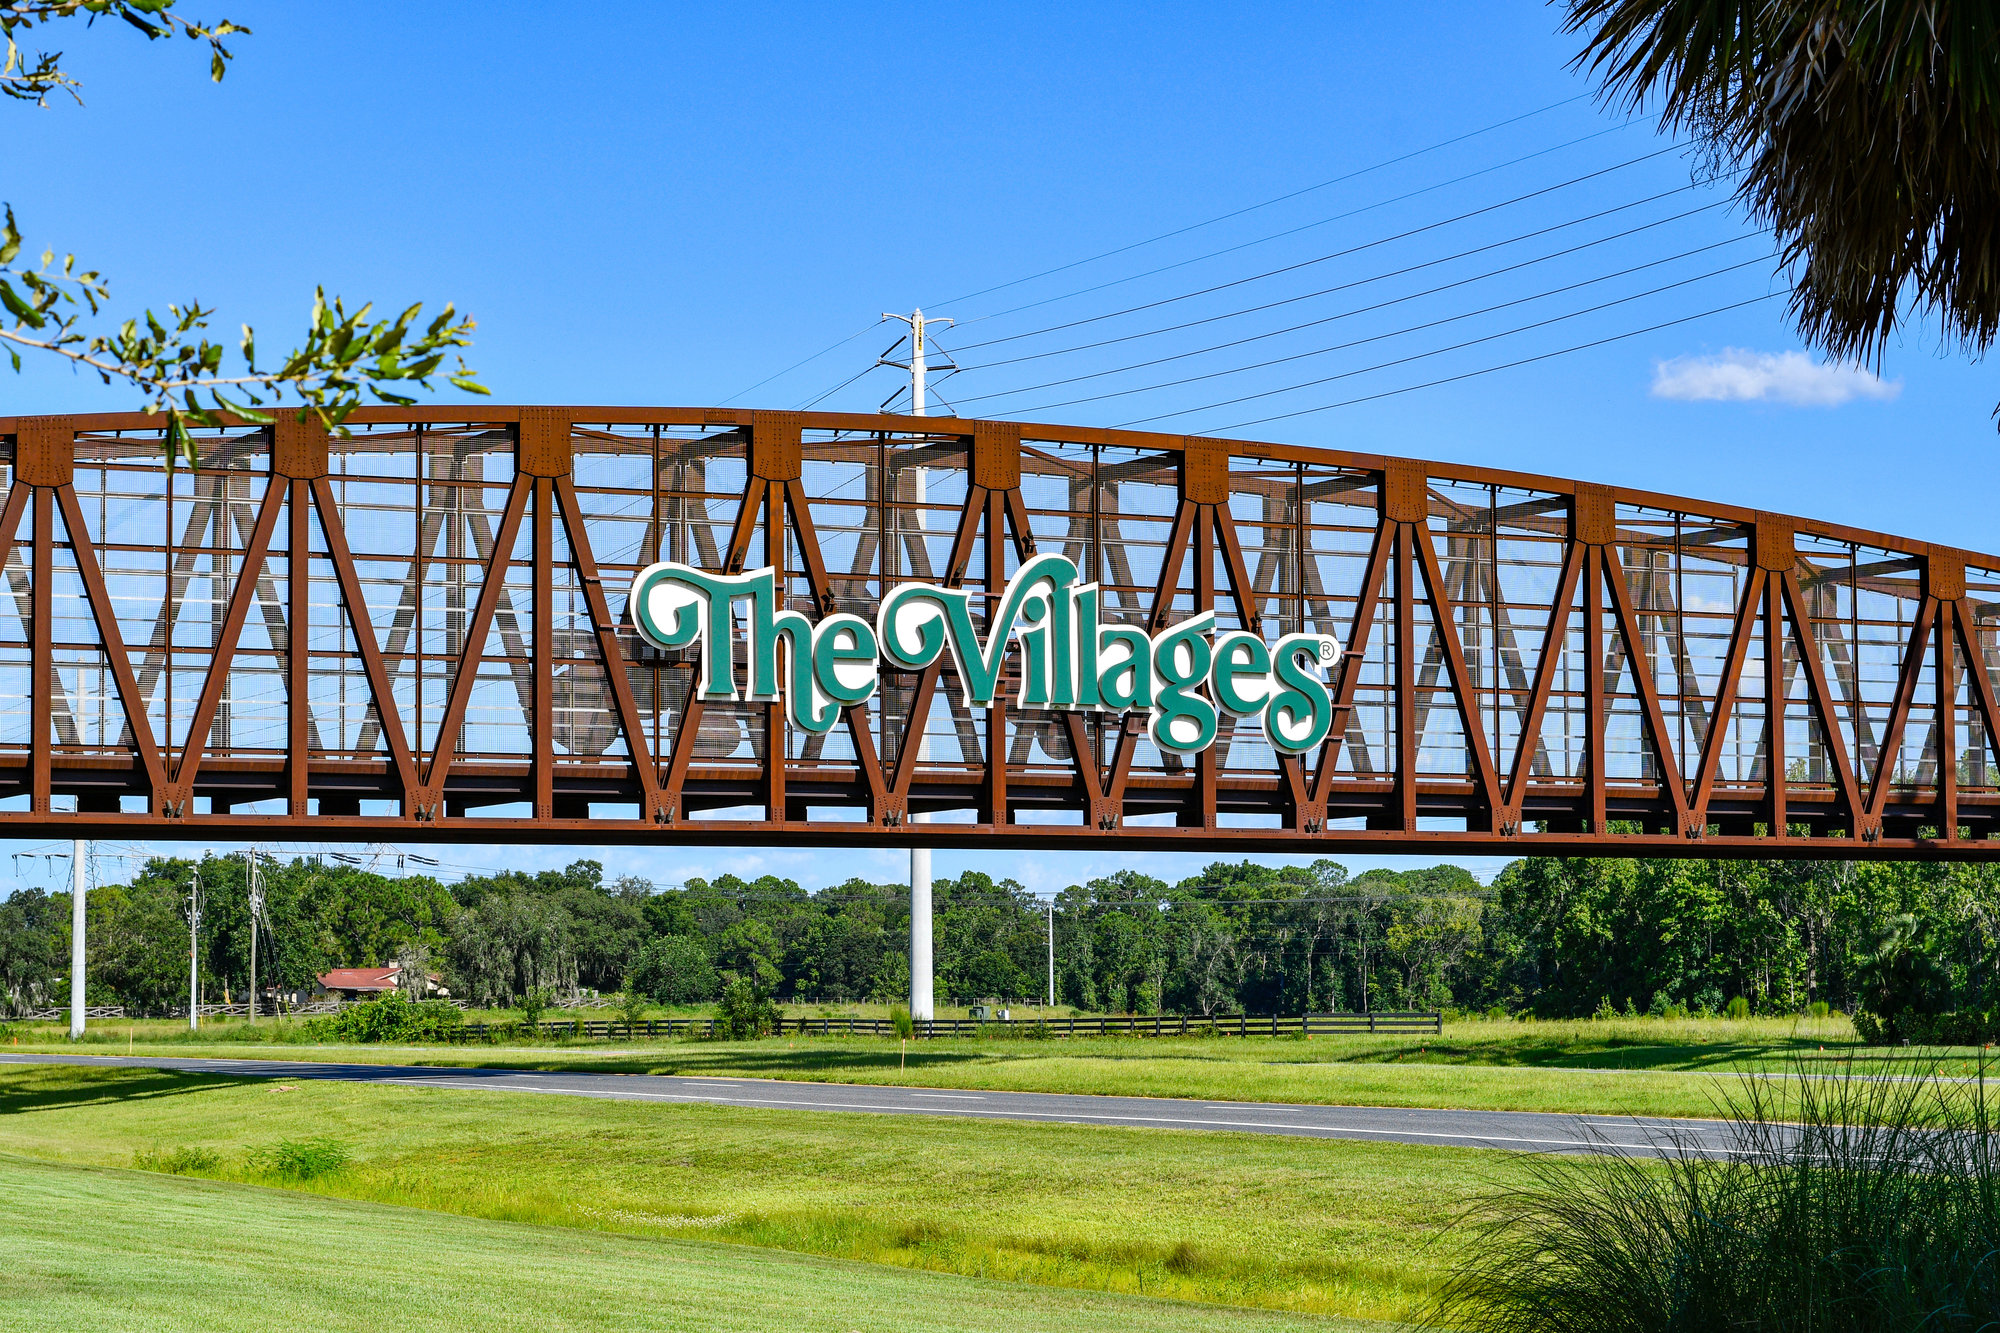 the villages sign on a metal bridge